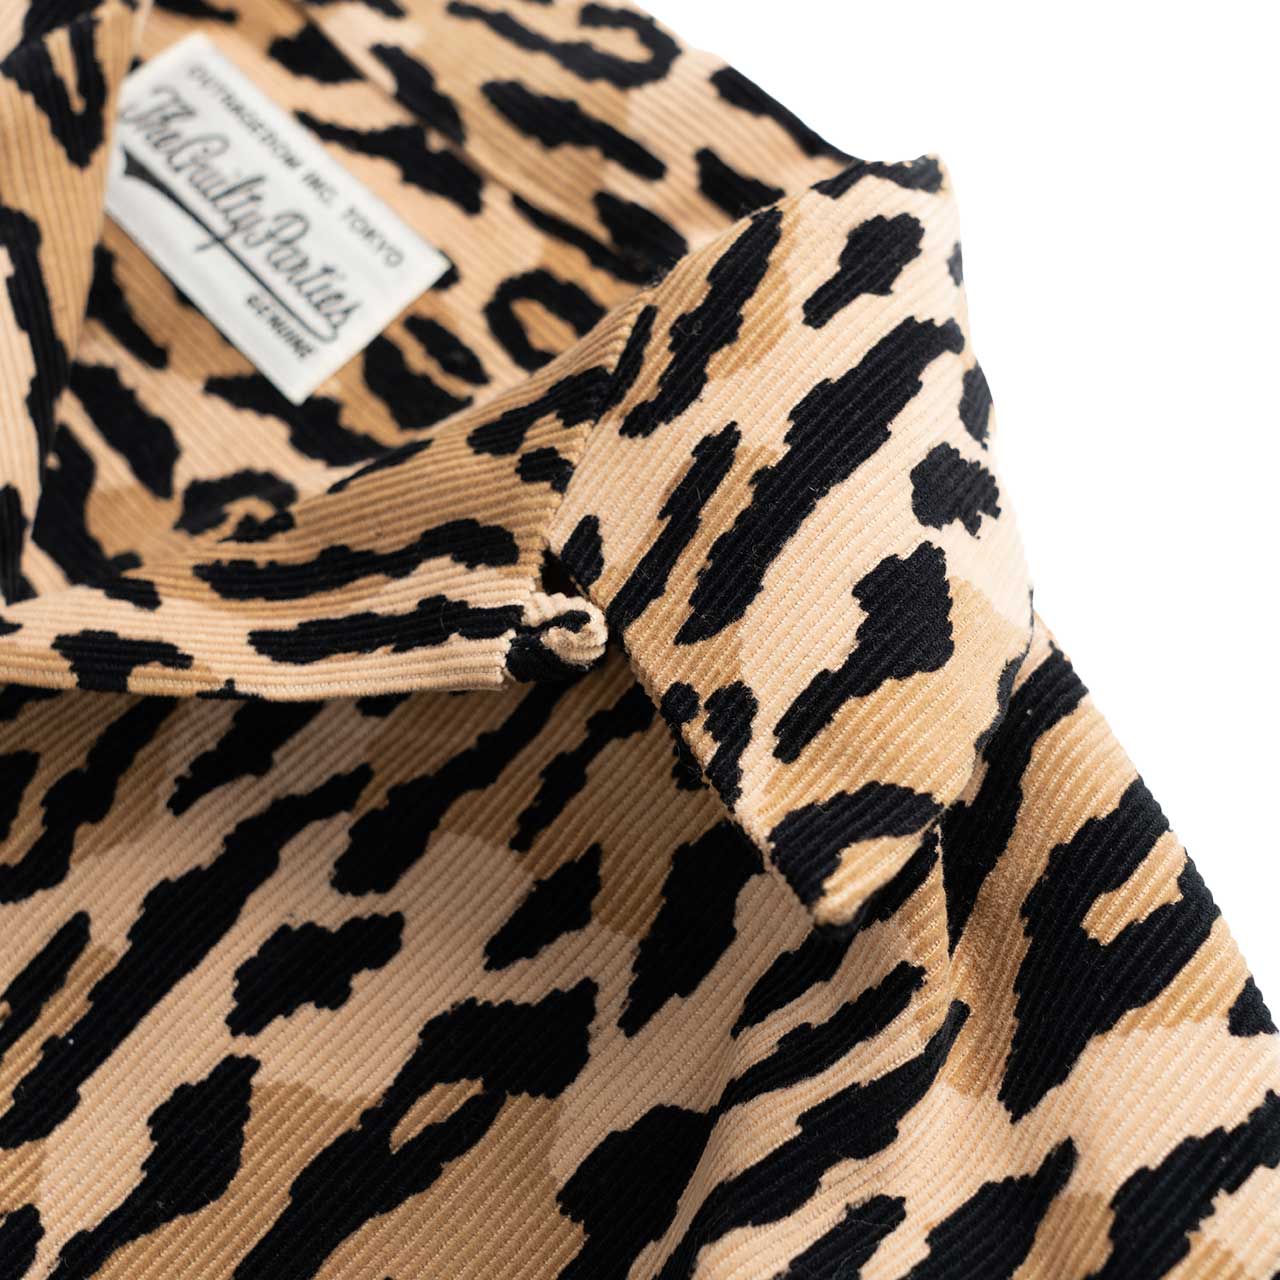 wackomaria leopard corduroy shirt